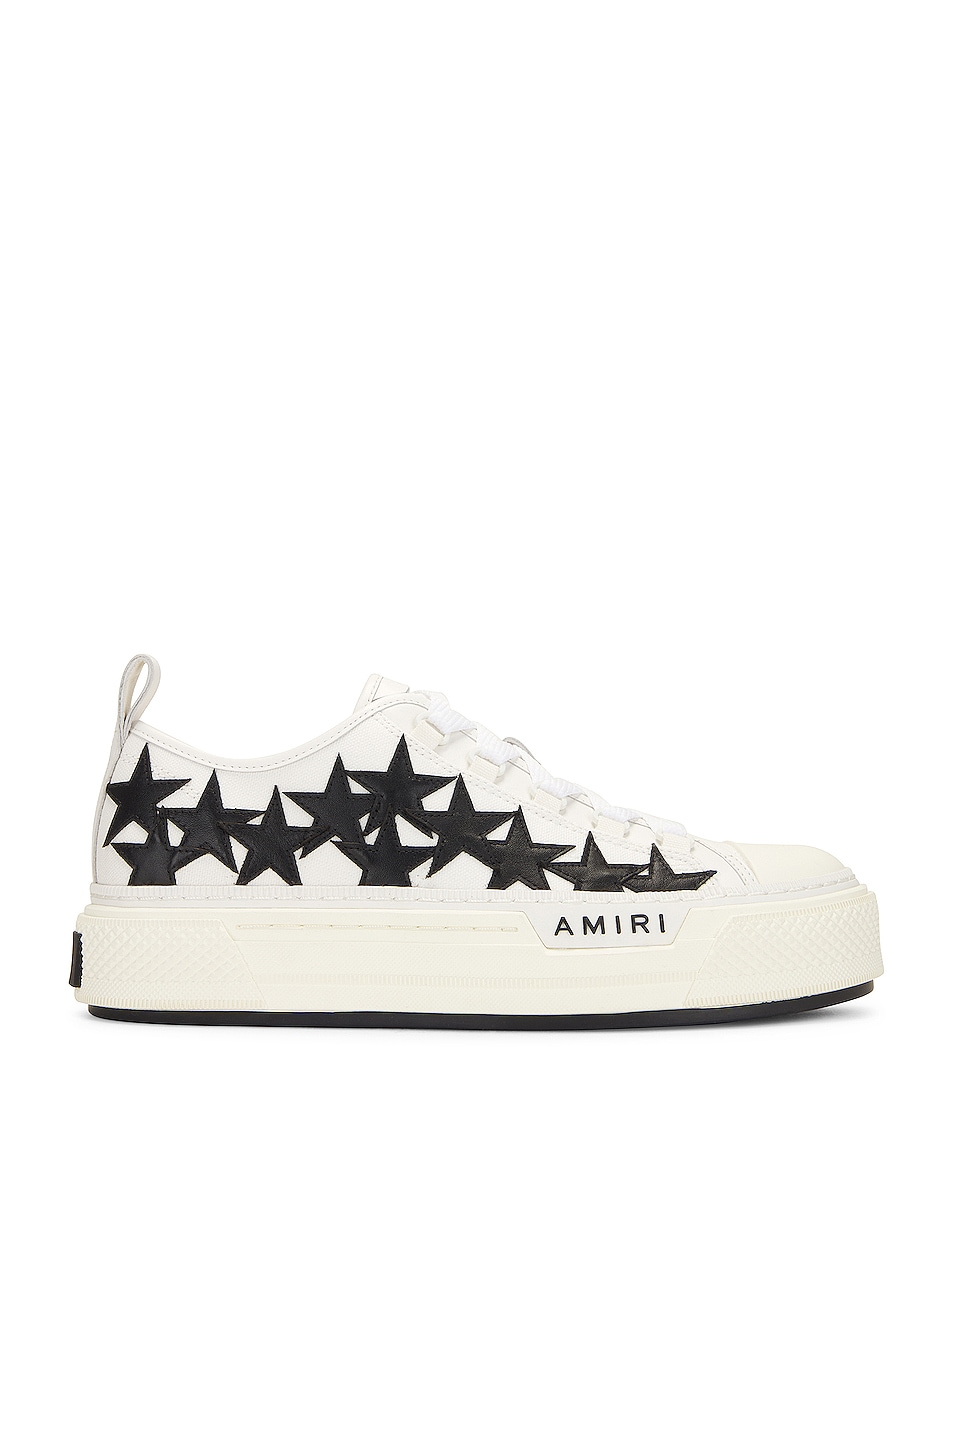 Amiri Stars Court Low Top Sneakers in White & Black | FWRD